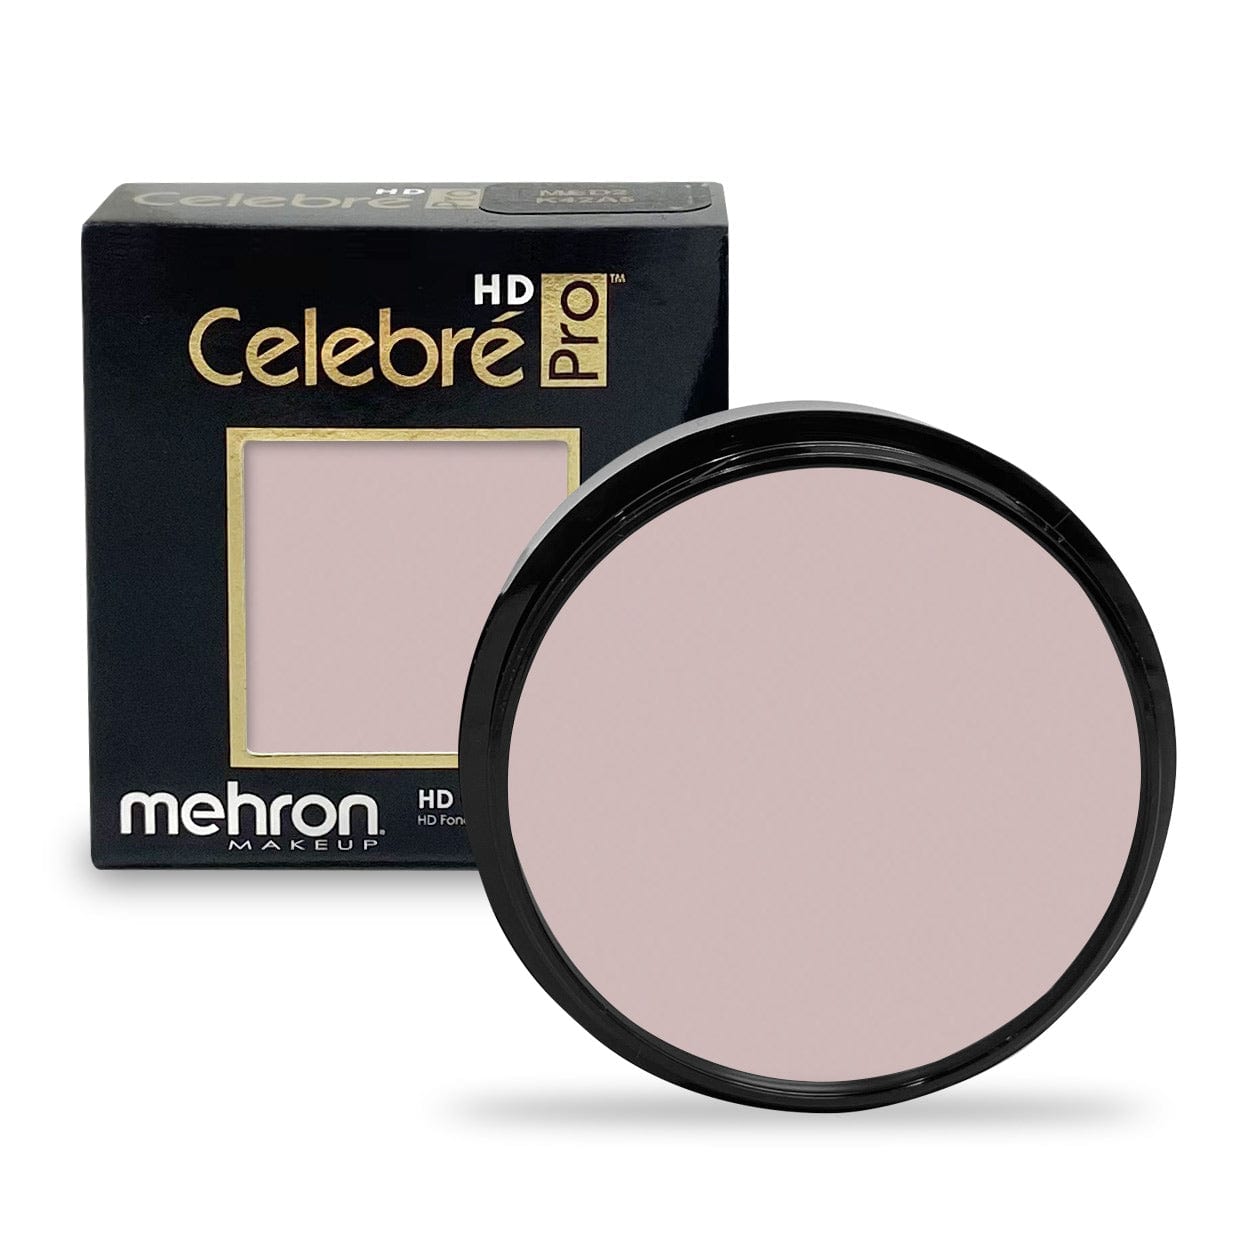 Mehron Celebre Pro HD Cream 25g - TV2 Ivory Bisque - Mehron